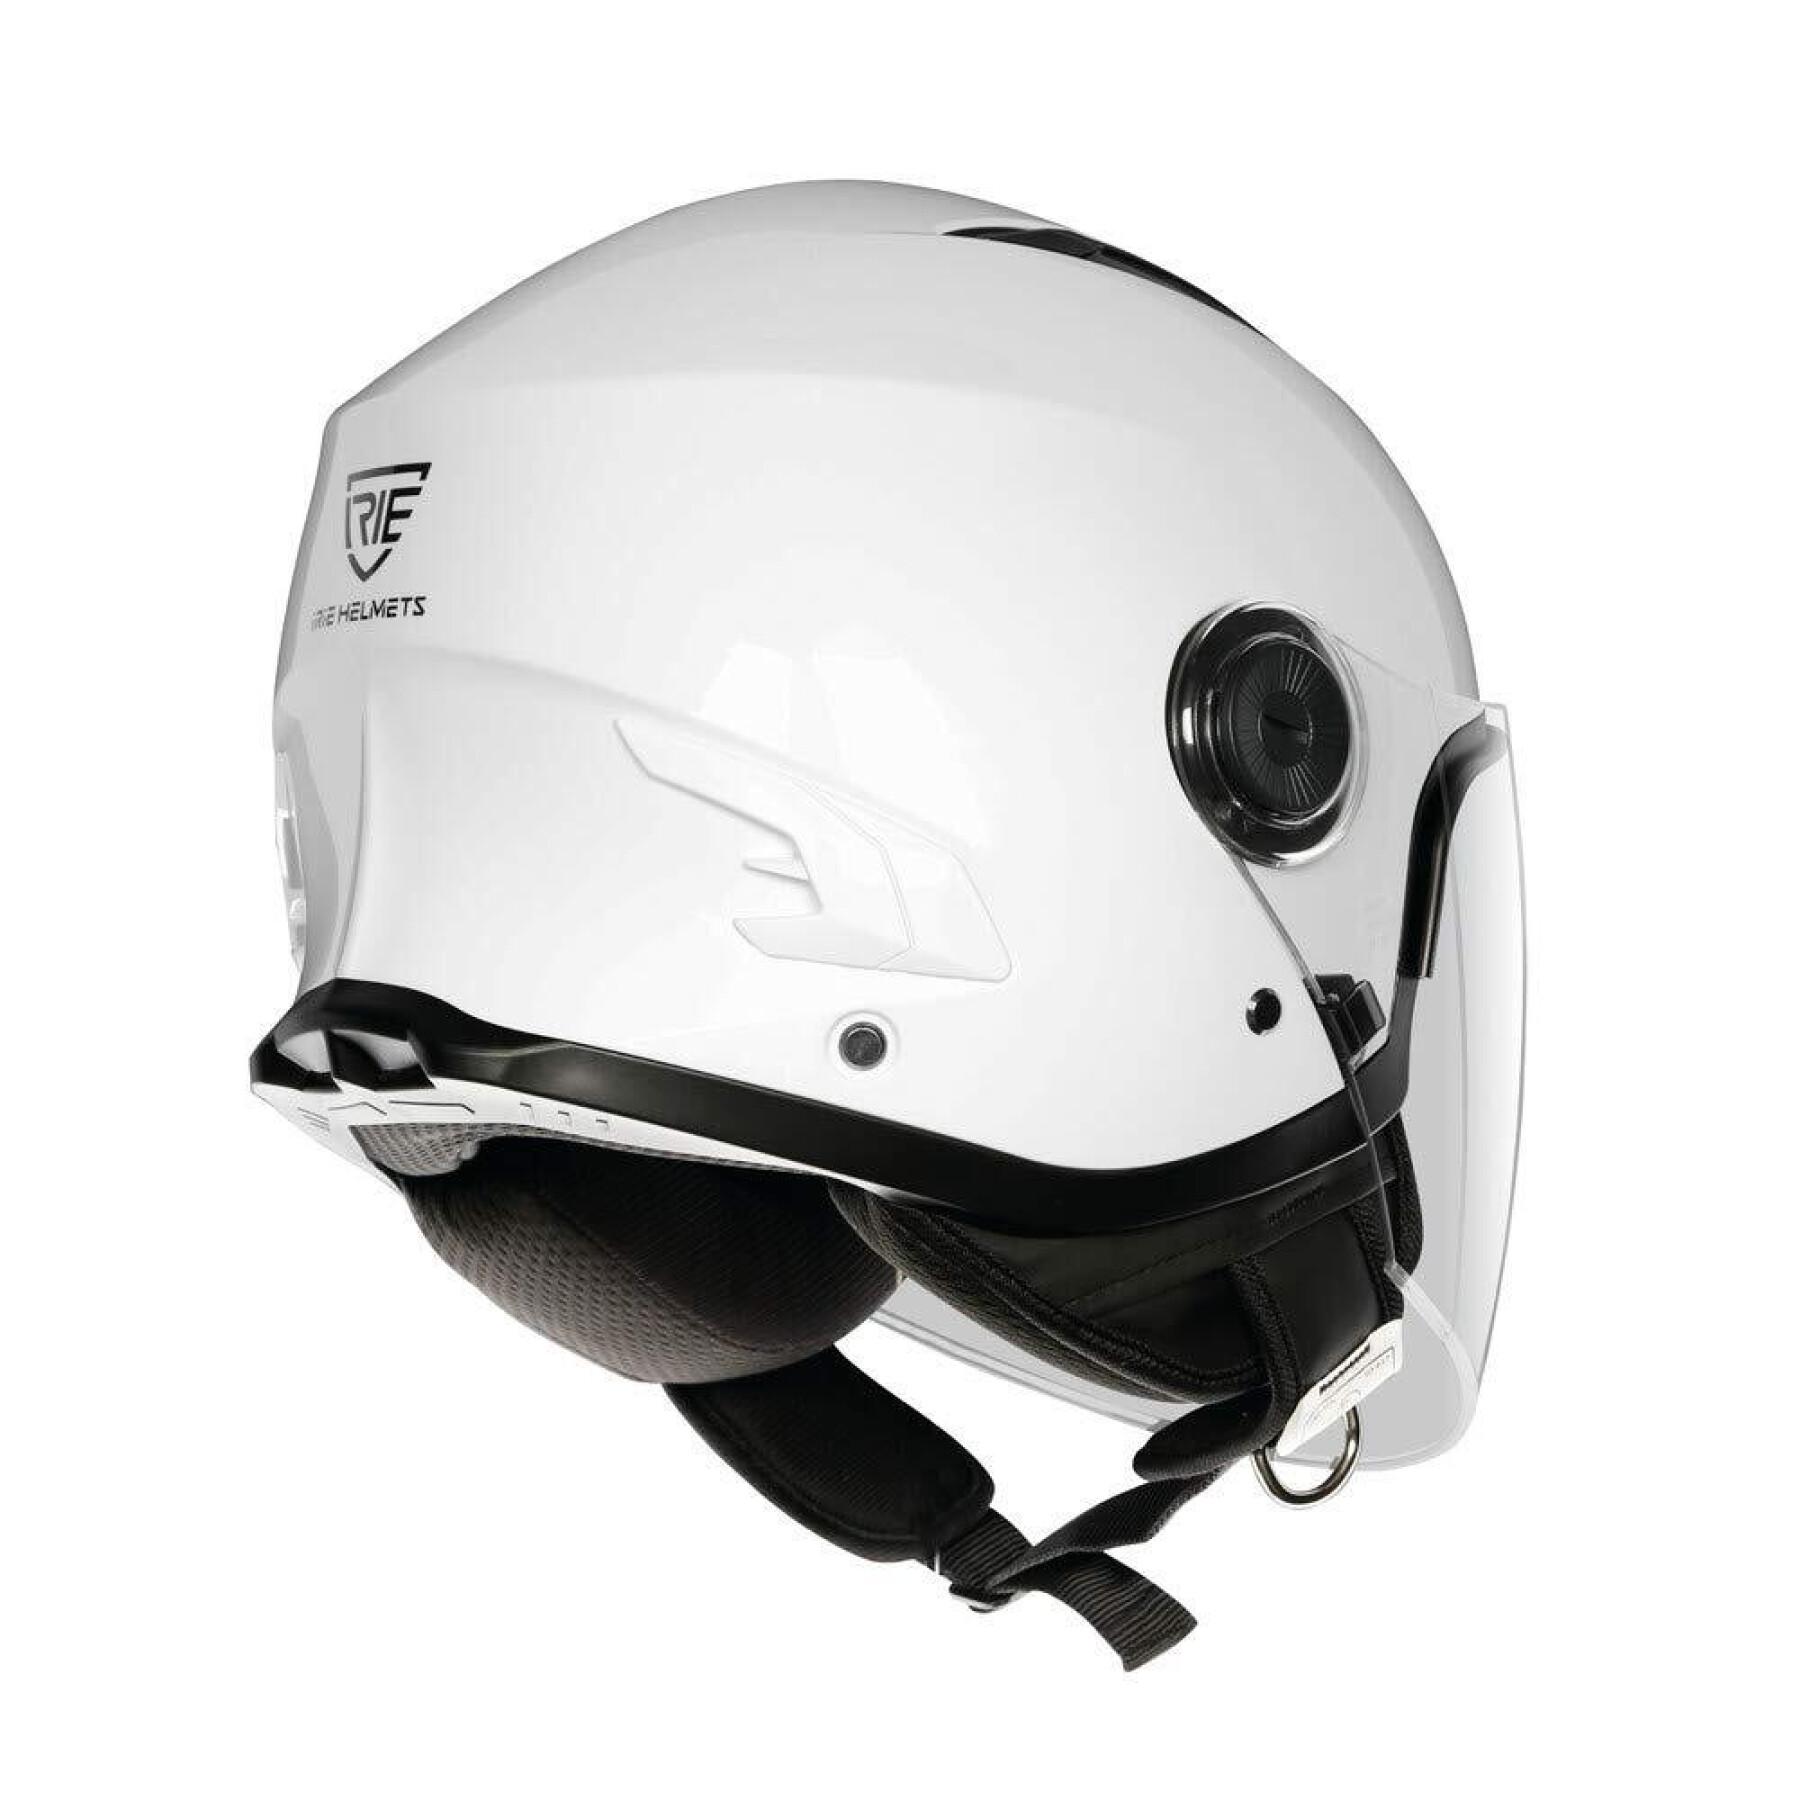 Jet motorcycle helmet IRIE Helmets Milano